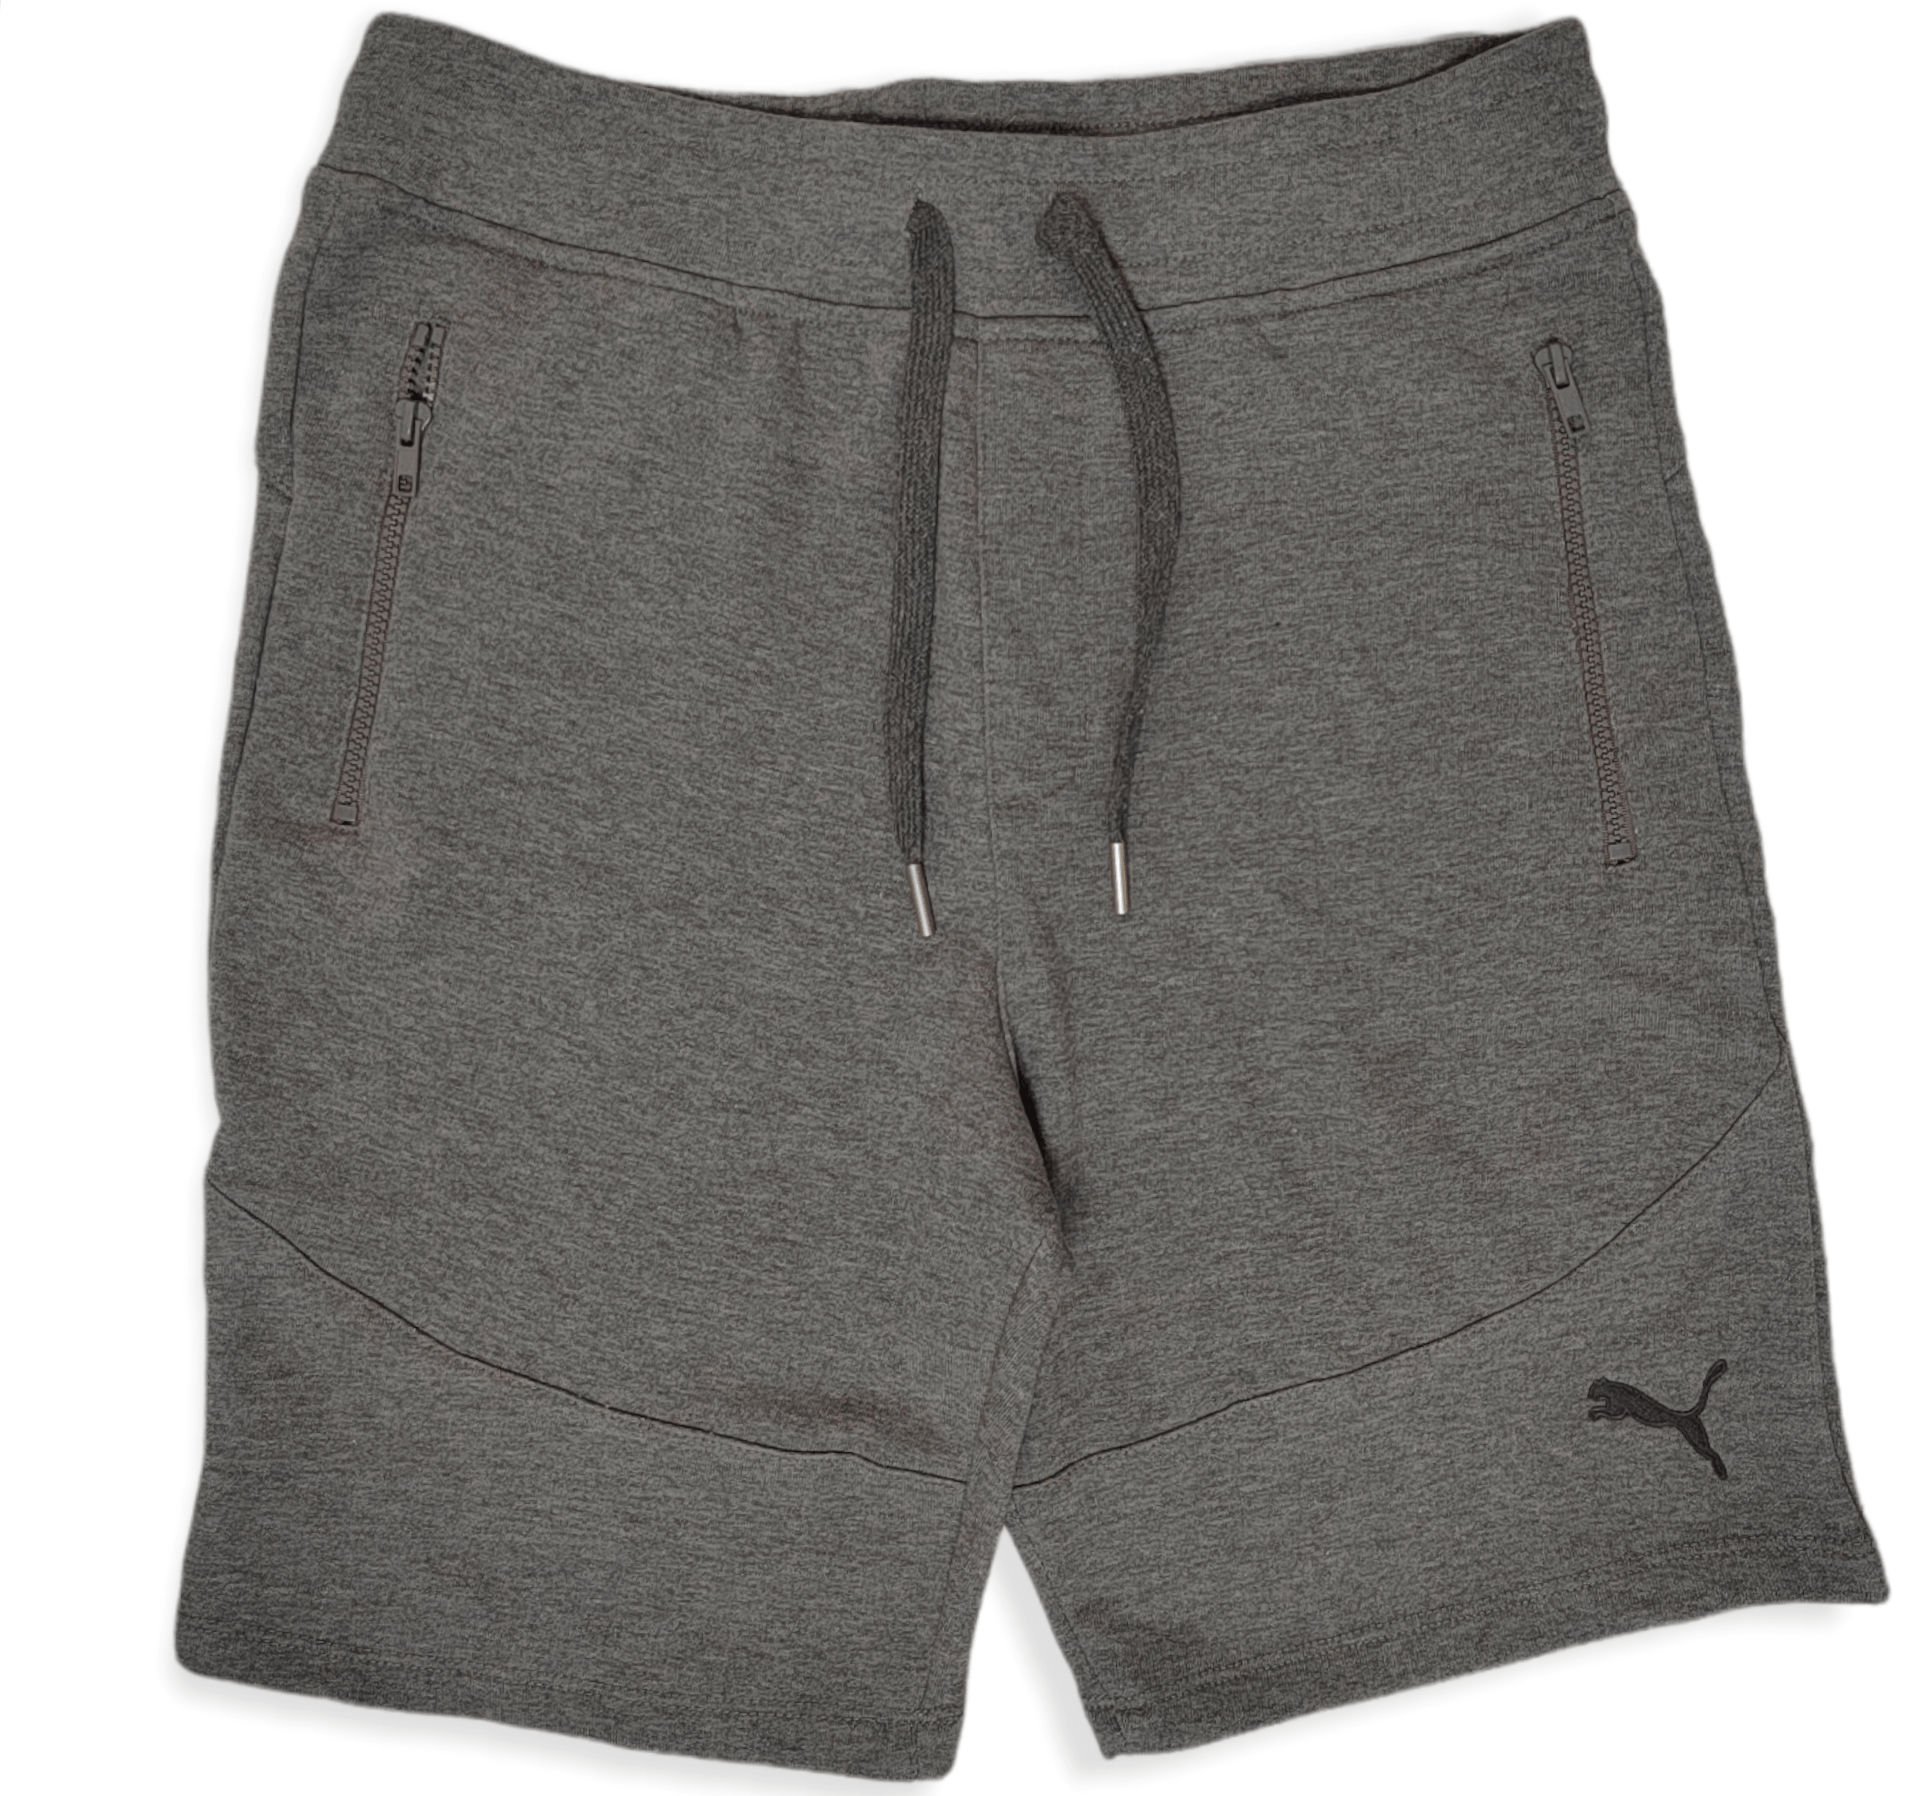 ElOutlet - Men Summer Men Shorts Men Cotton Shorts Grey